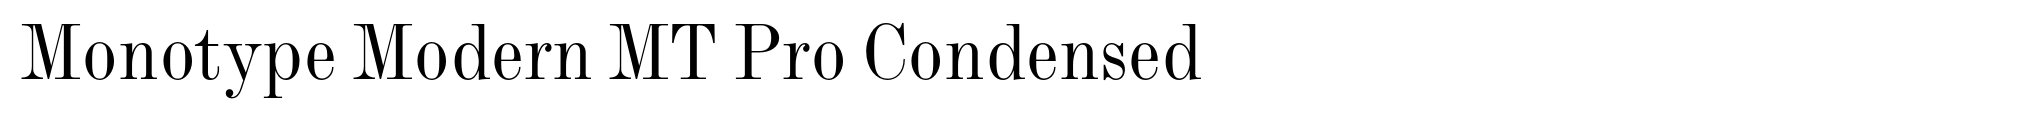 Monotype Modern MT Pro Condensed image